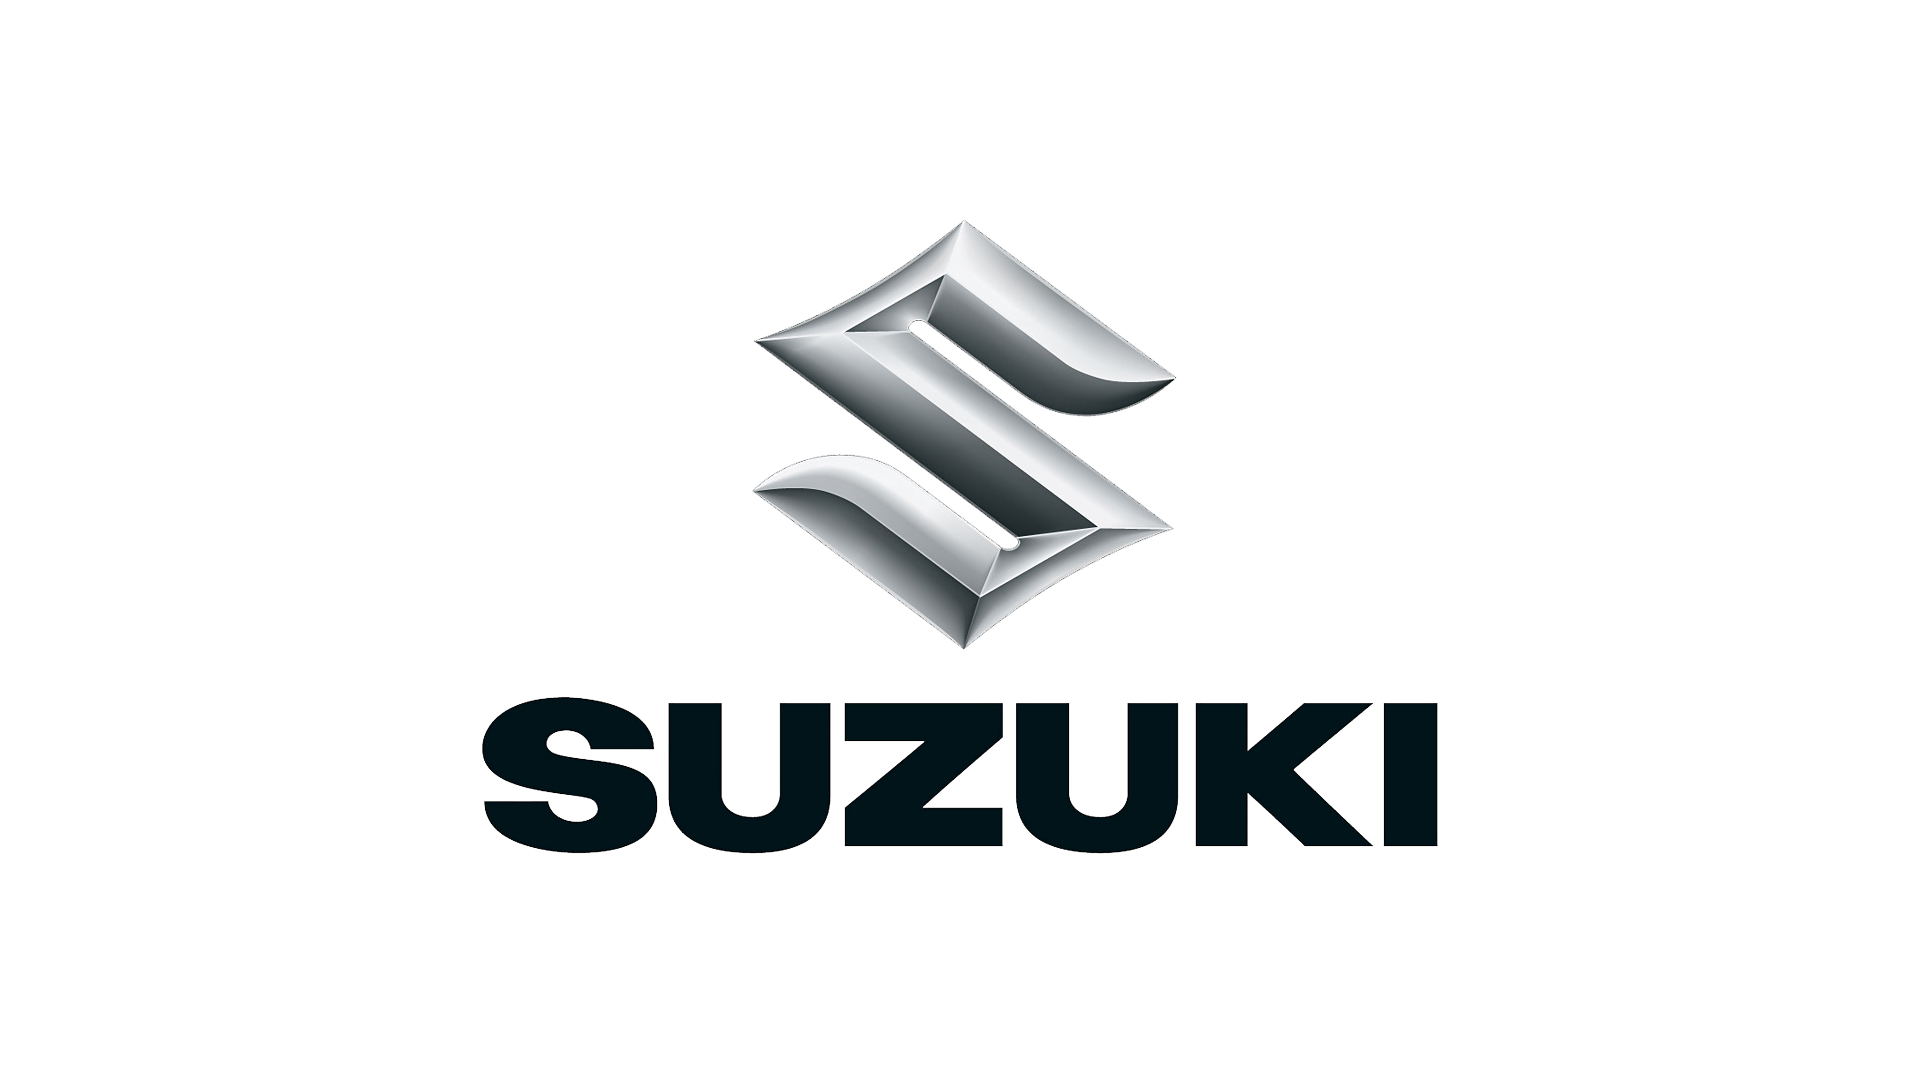 Suzuki Logo 1920X1080 Hd Png - Suzuki, Transparent background PNG HD thumbnail